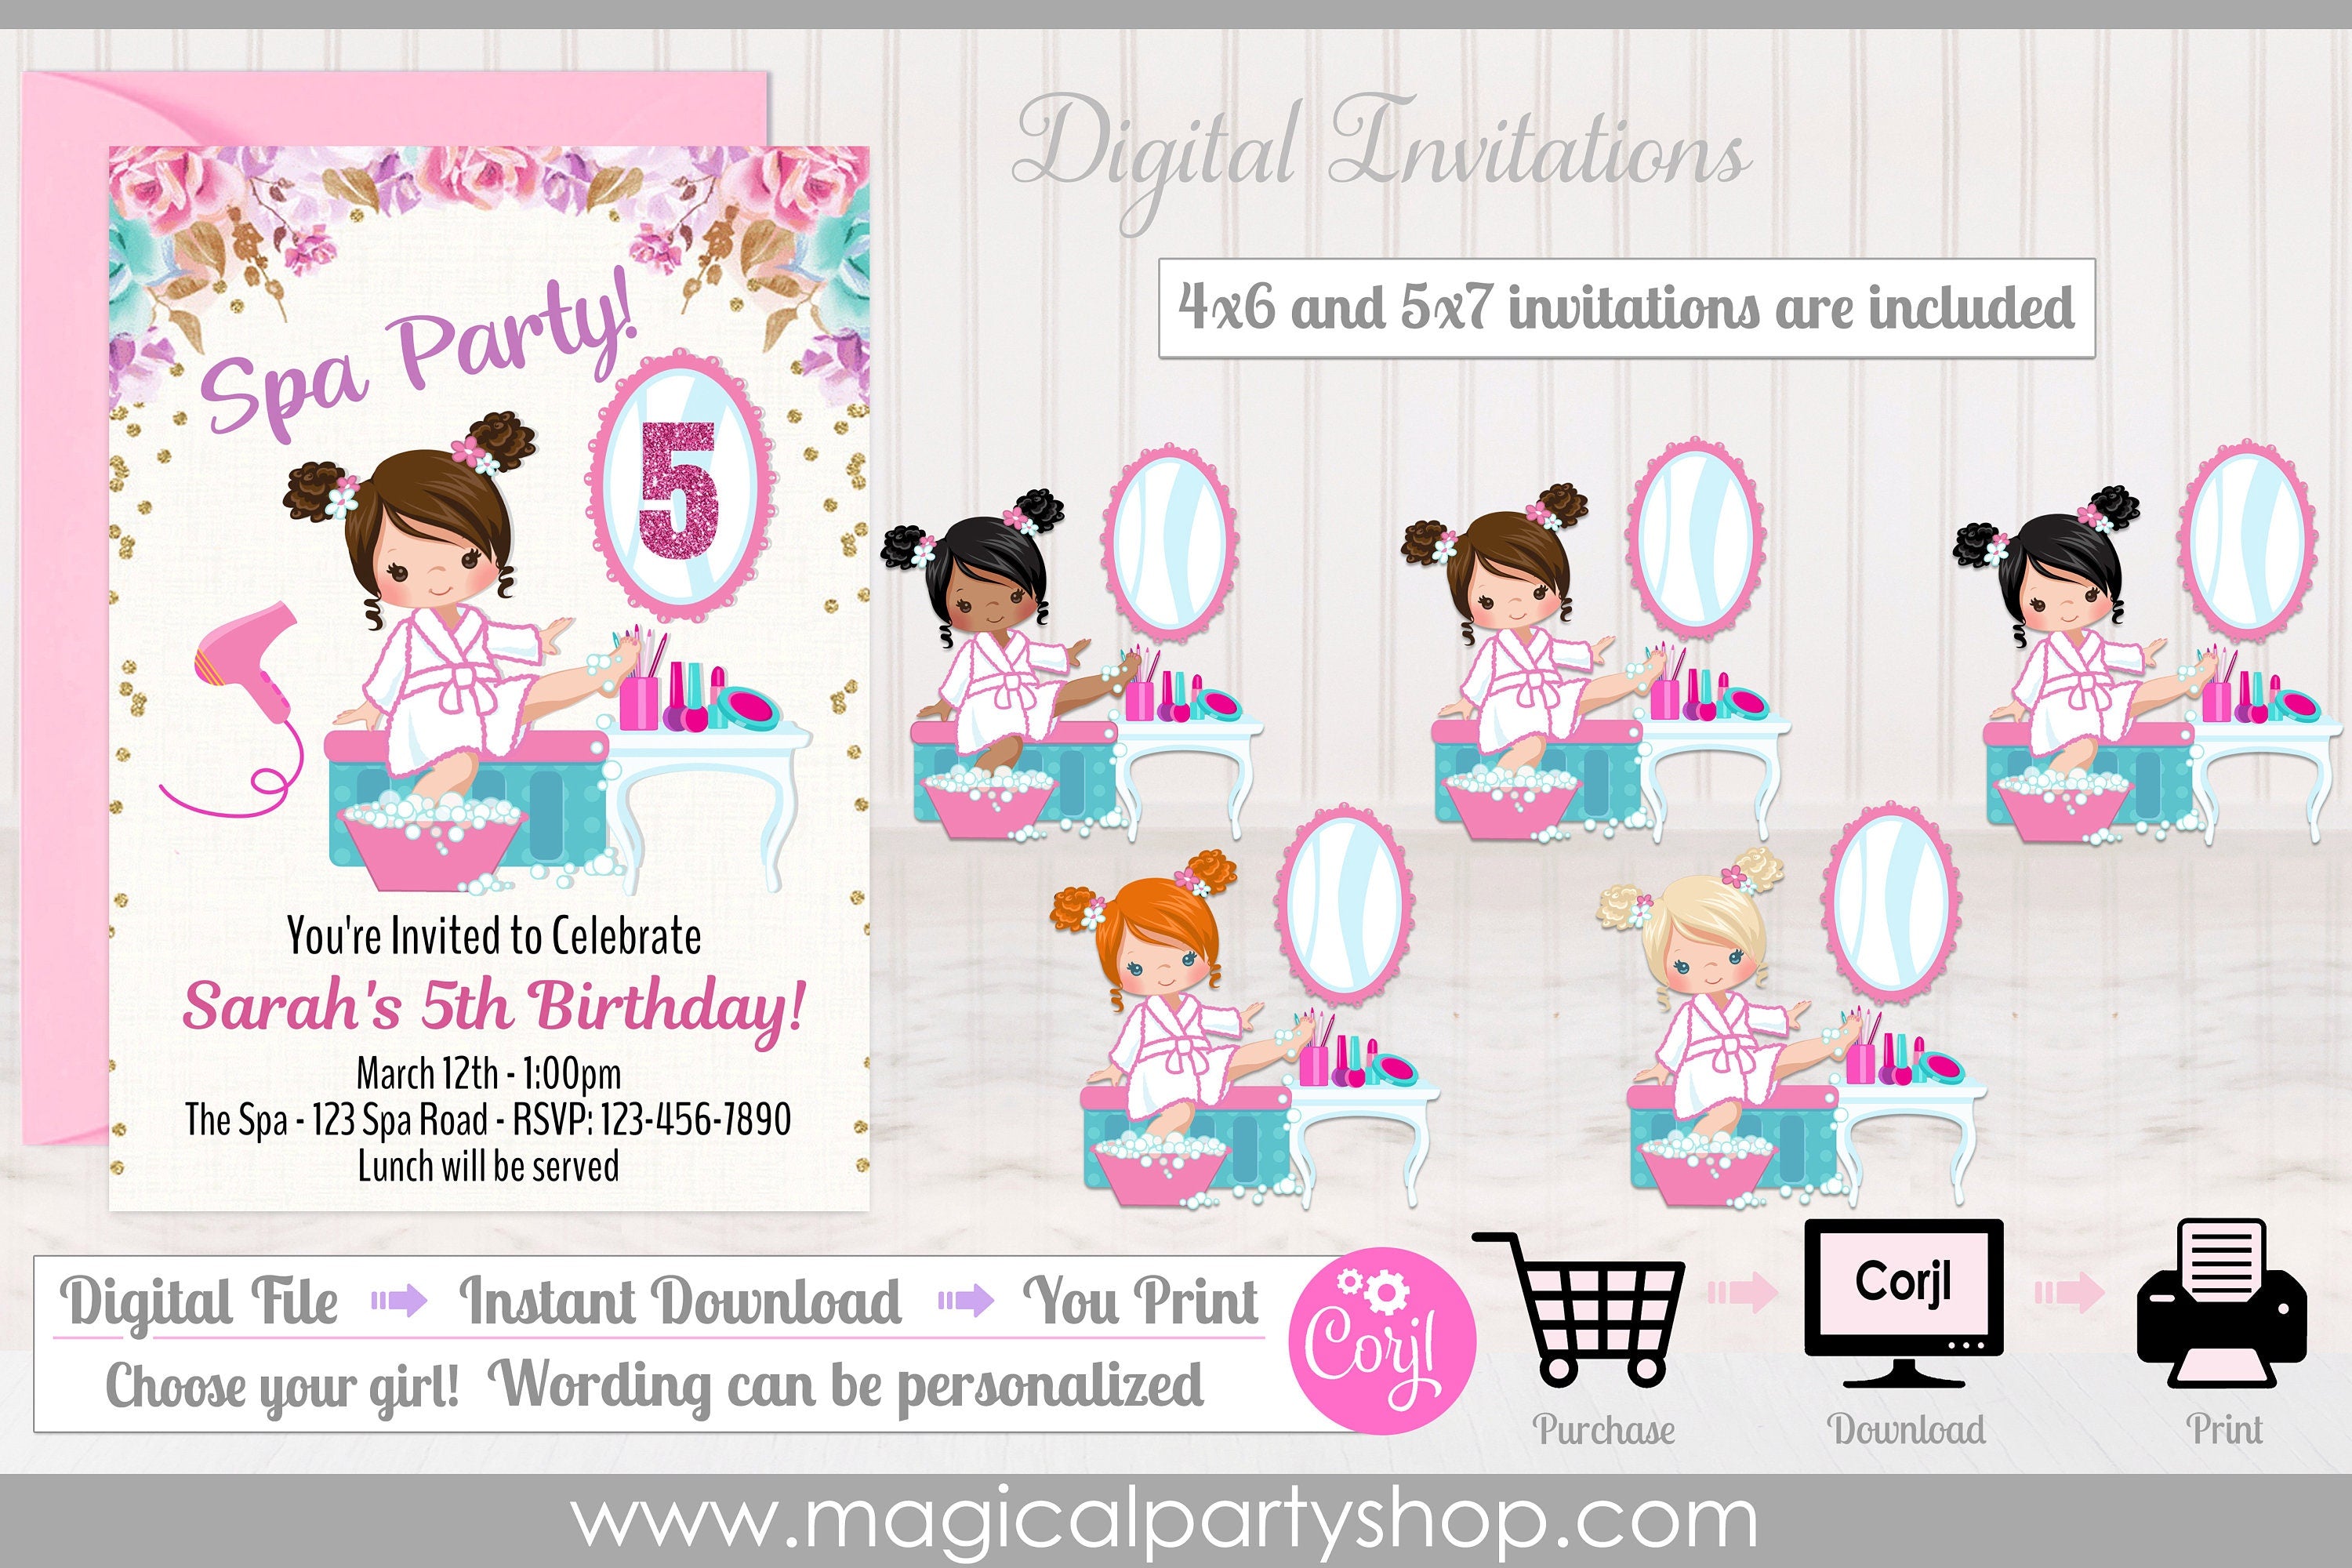 Spa Digital Invitation | Spa party decor | Choose your girl | Choose your text color | Spa Party | Spa Invitation | Editable